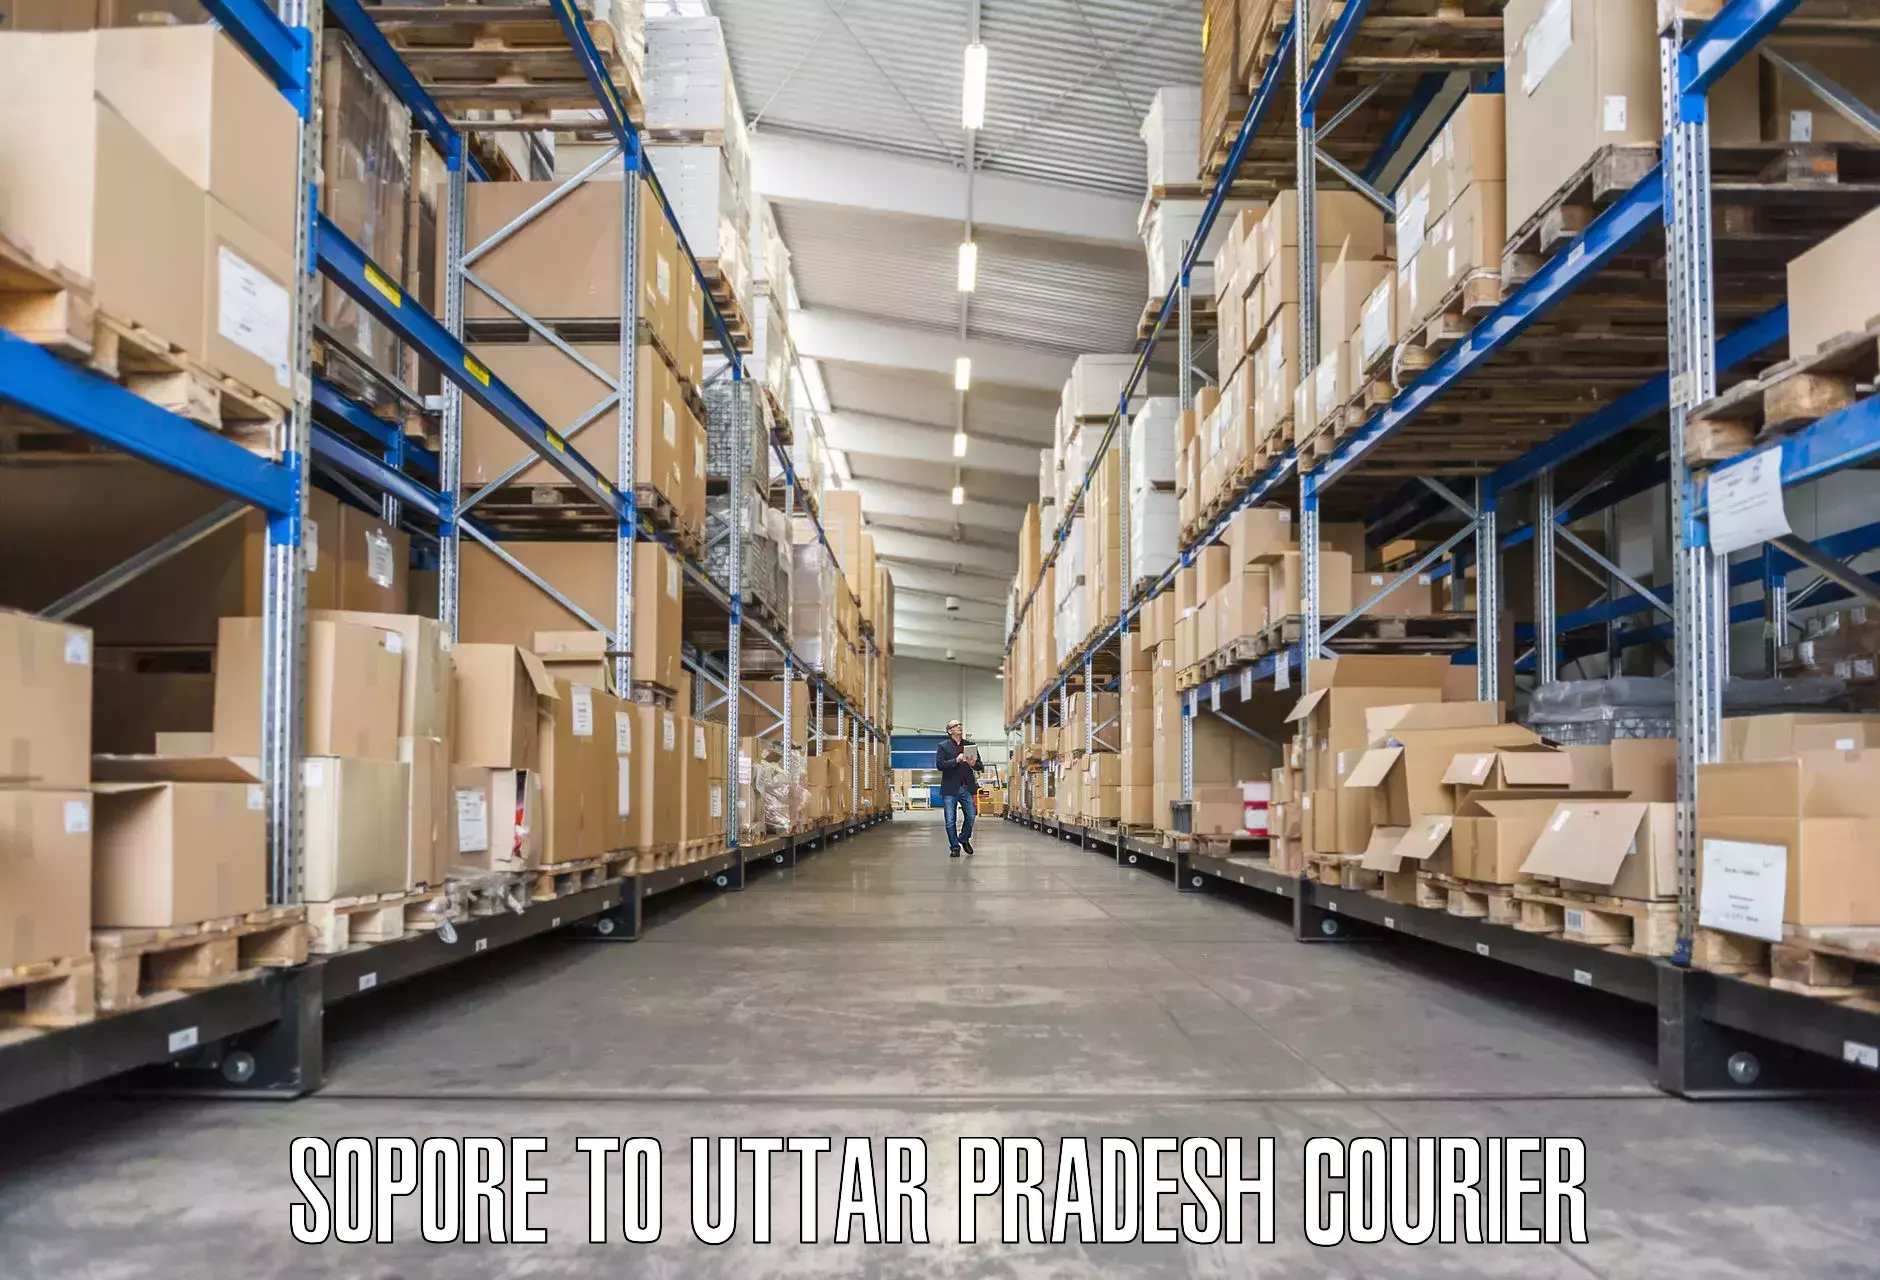 Furniture delivery service Sopore to Agra